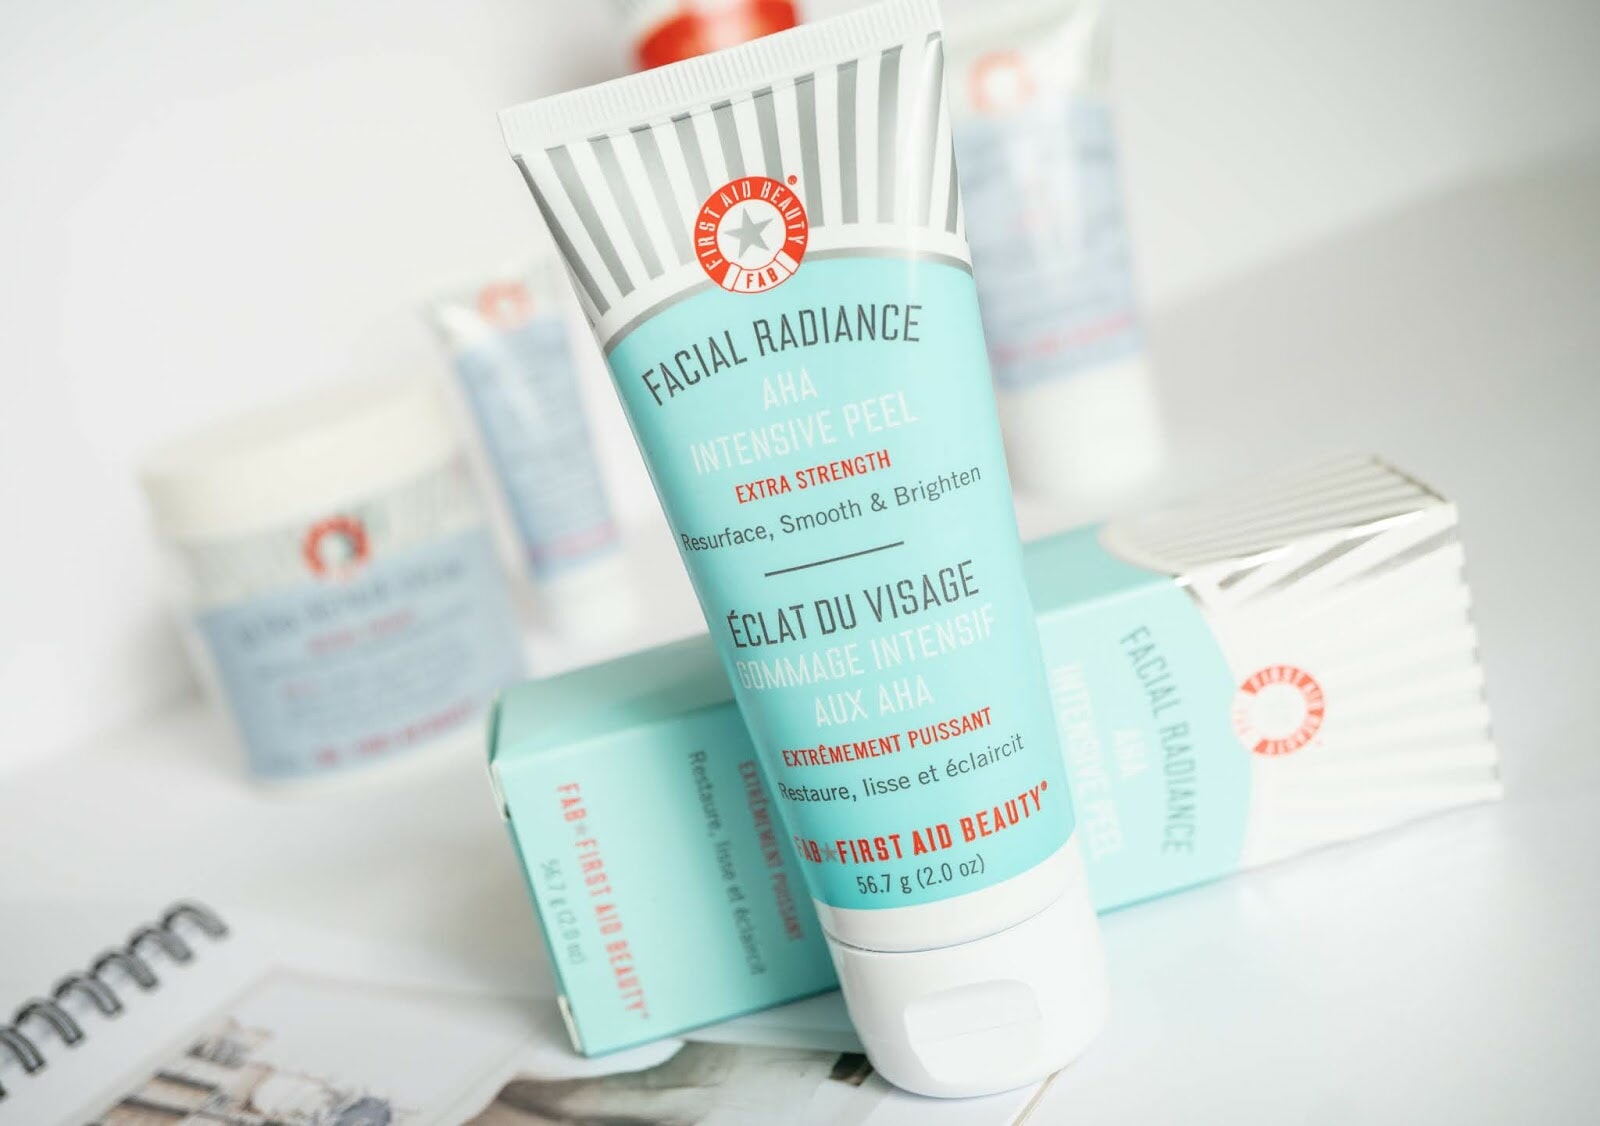 Sữa rửa mặt tốt nhất nói chung: First Aid Beauty Face Cleanser 